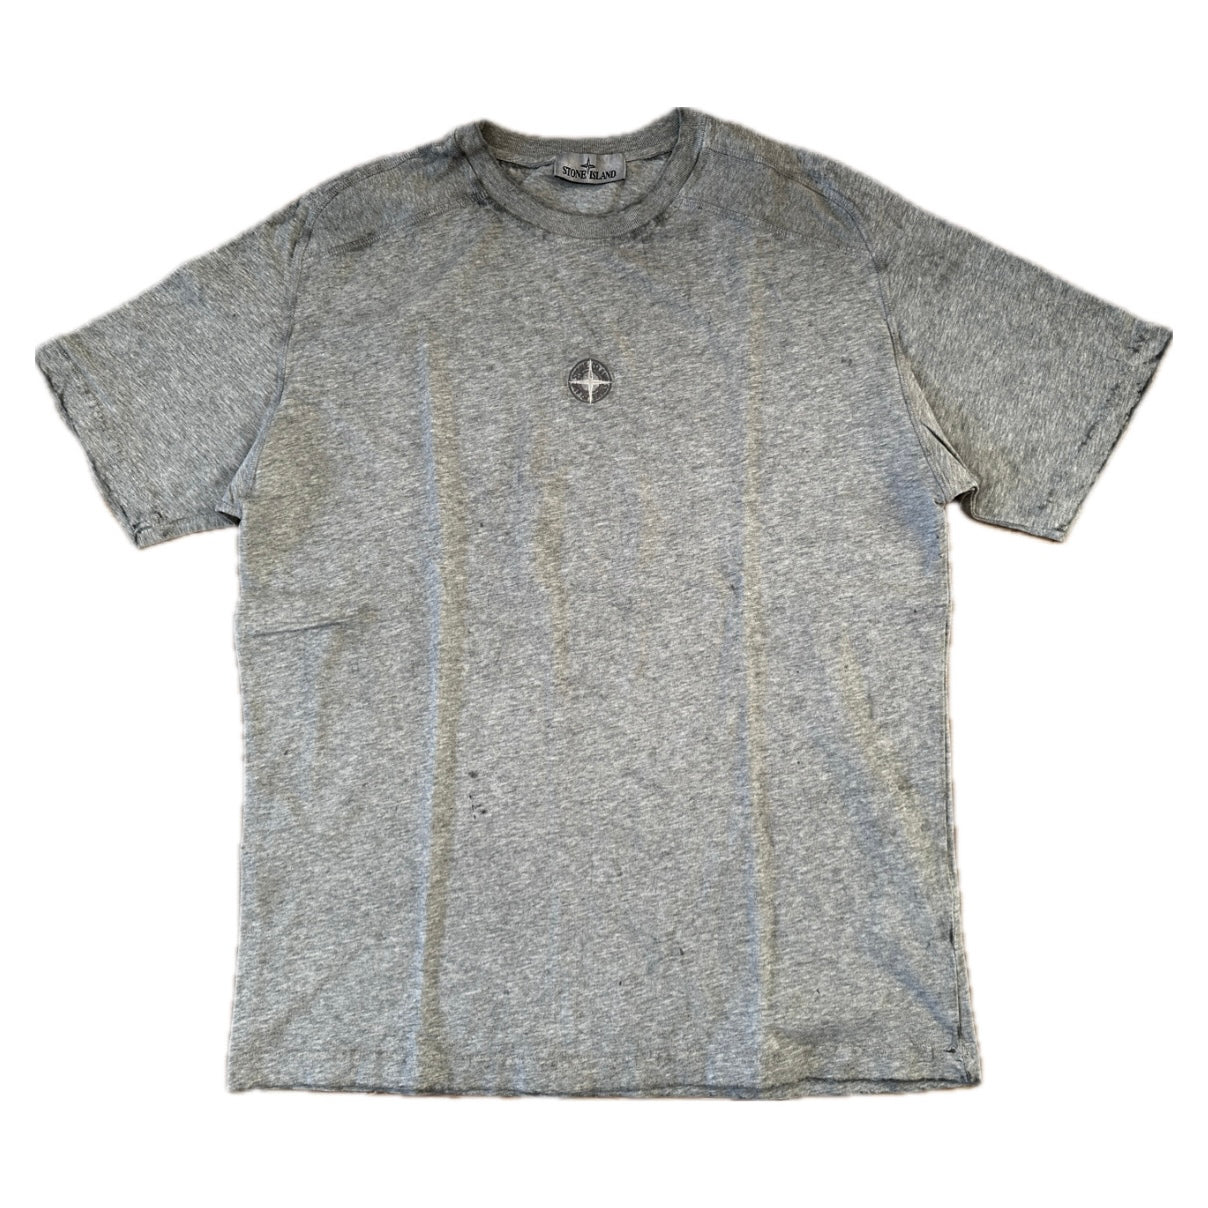 Stone Island 2021 Dust Colour Treatment Grey T-Shirt - M